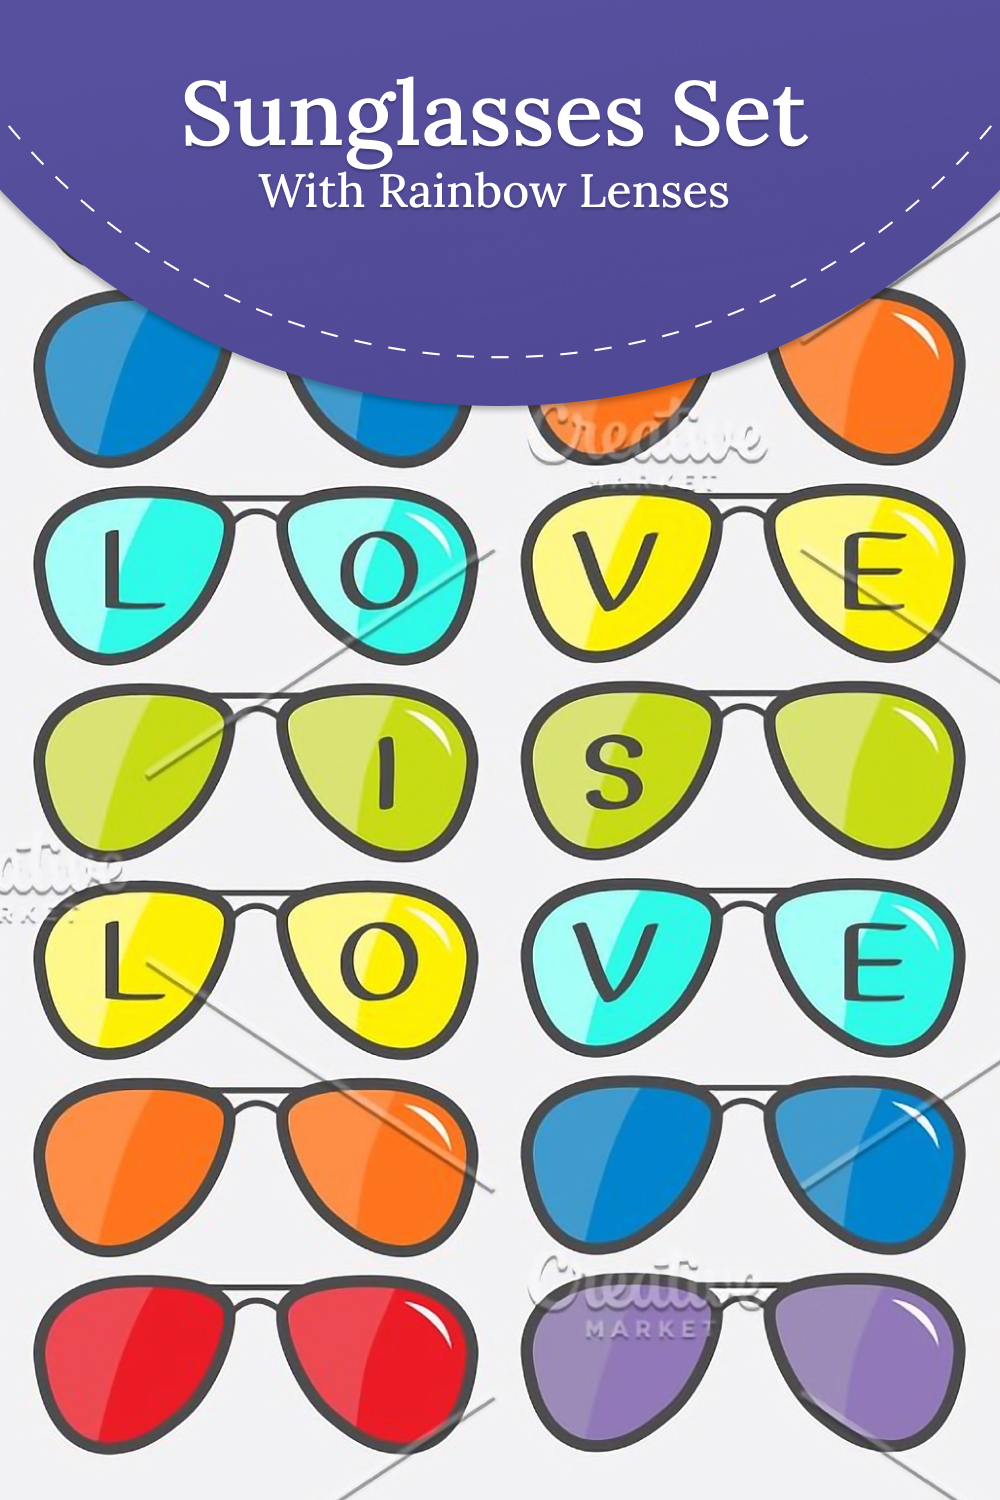 Sunglasses Set With Rainbow Lenses Pinterest Cover.